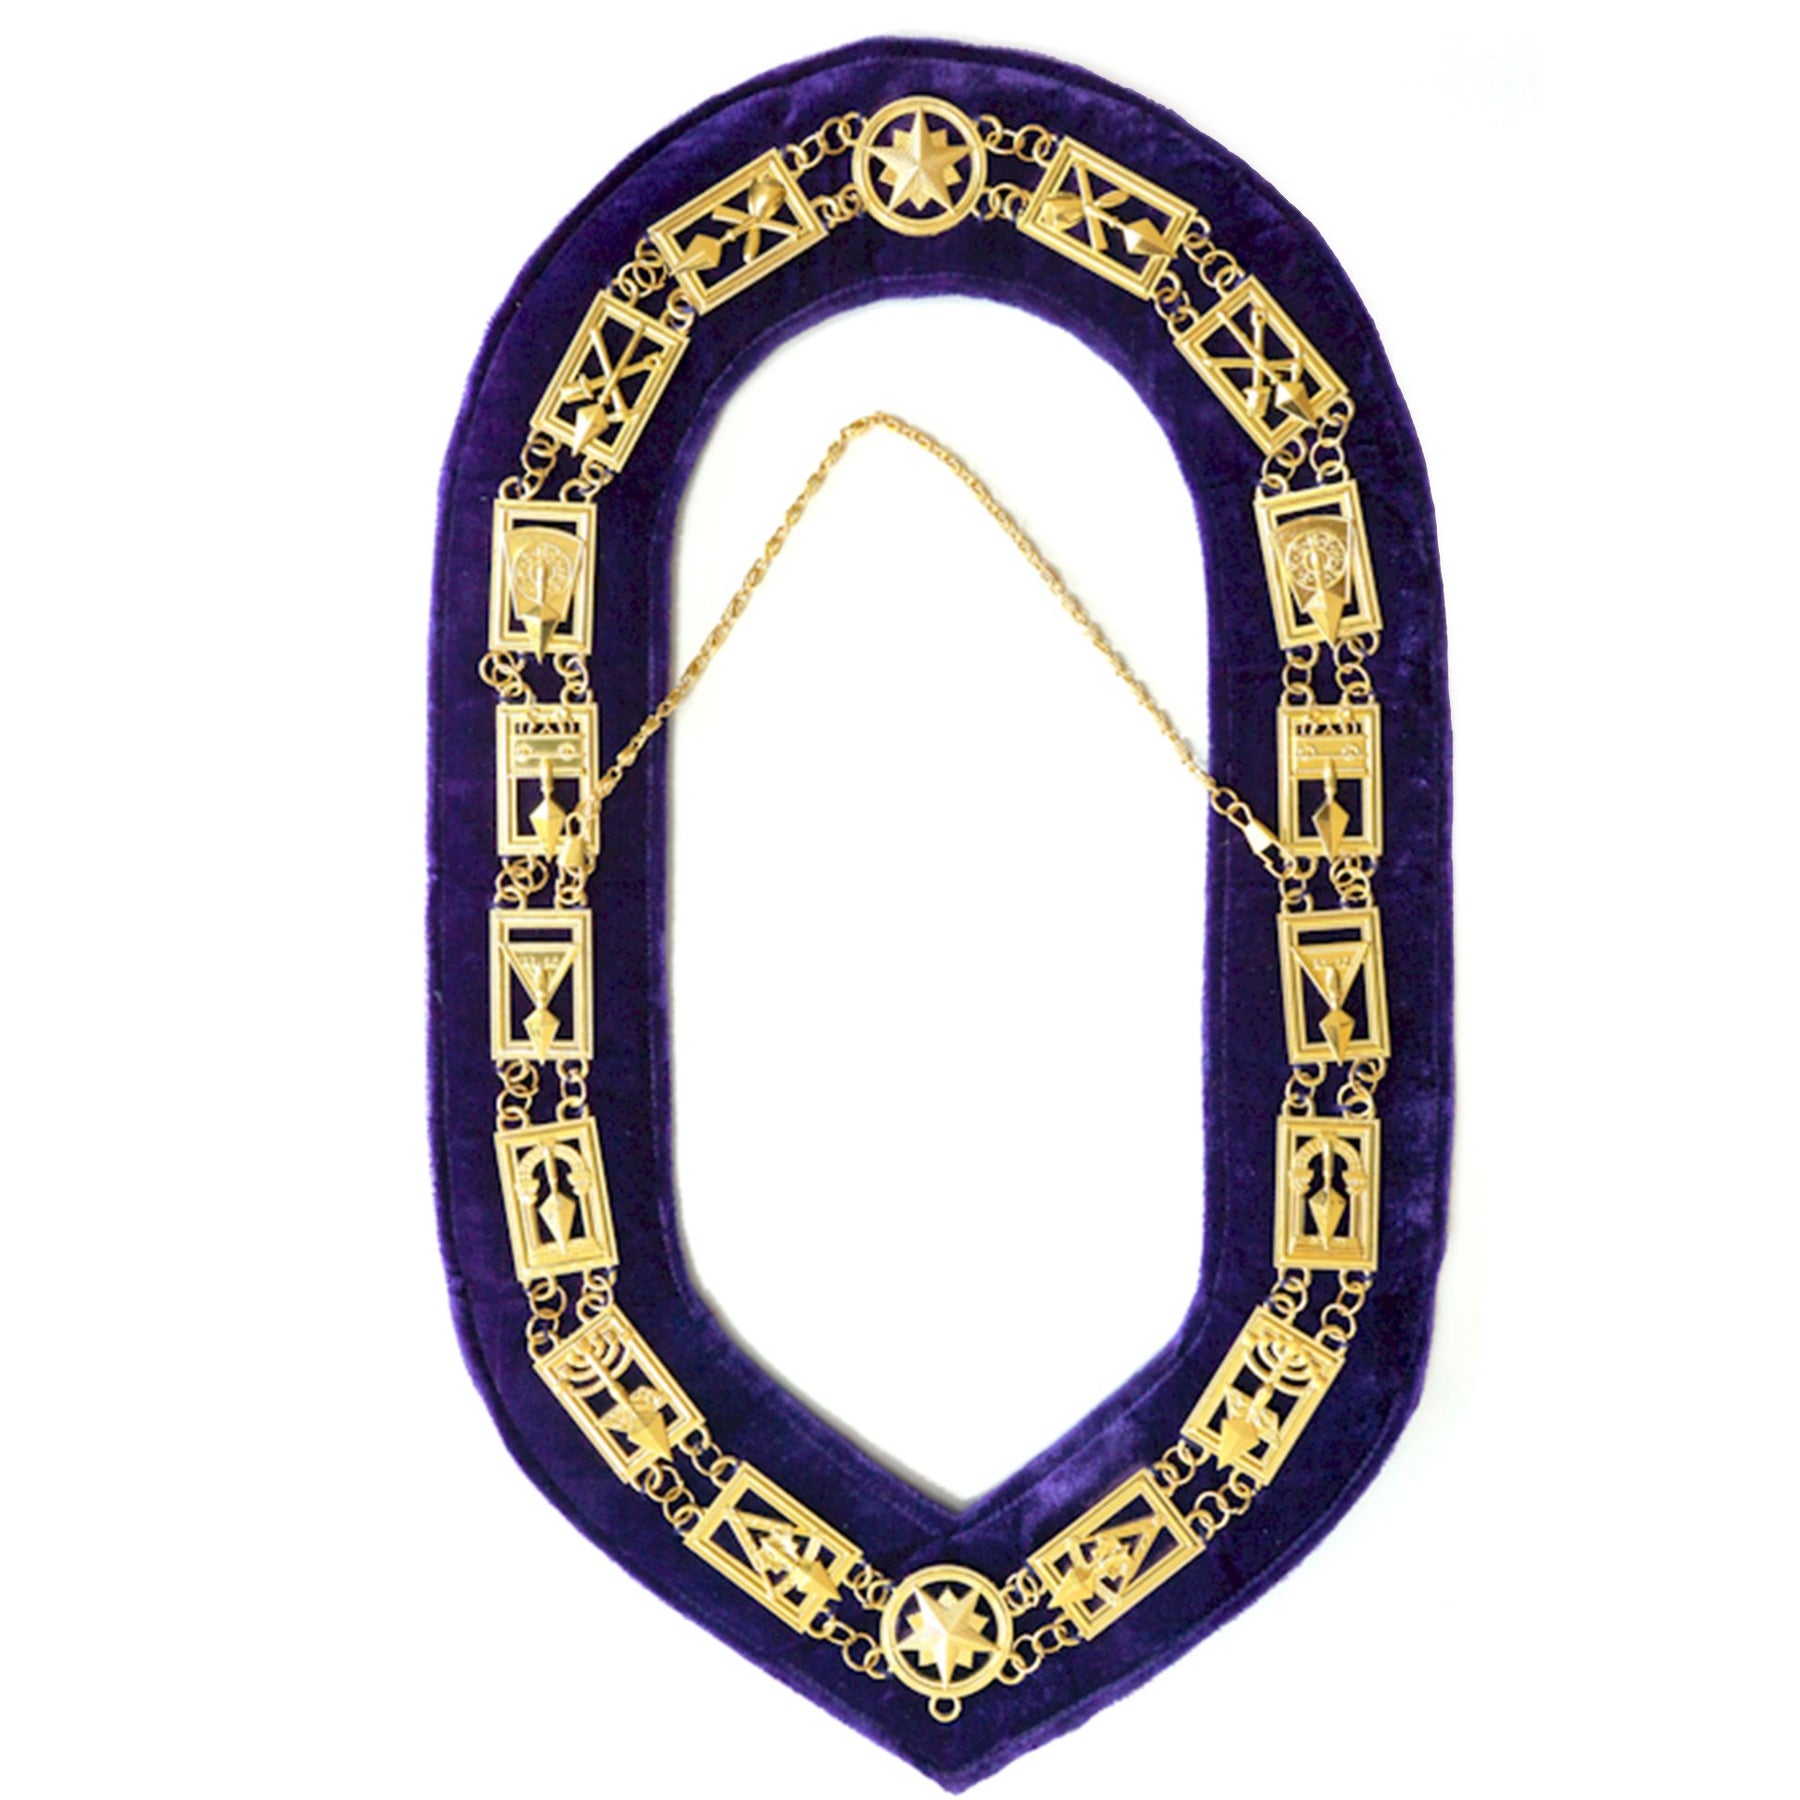 Council Chain Collar - Gold Plated on Purple Velvet - Bricks Masons